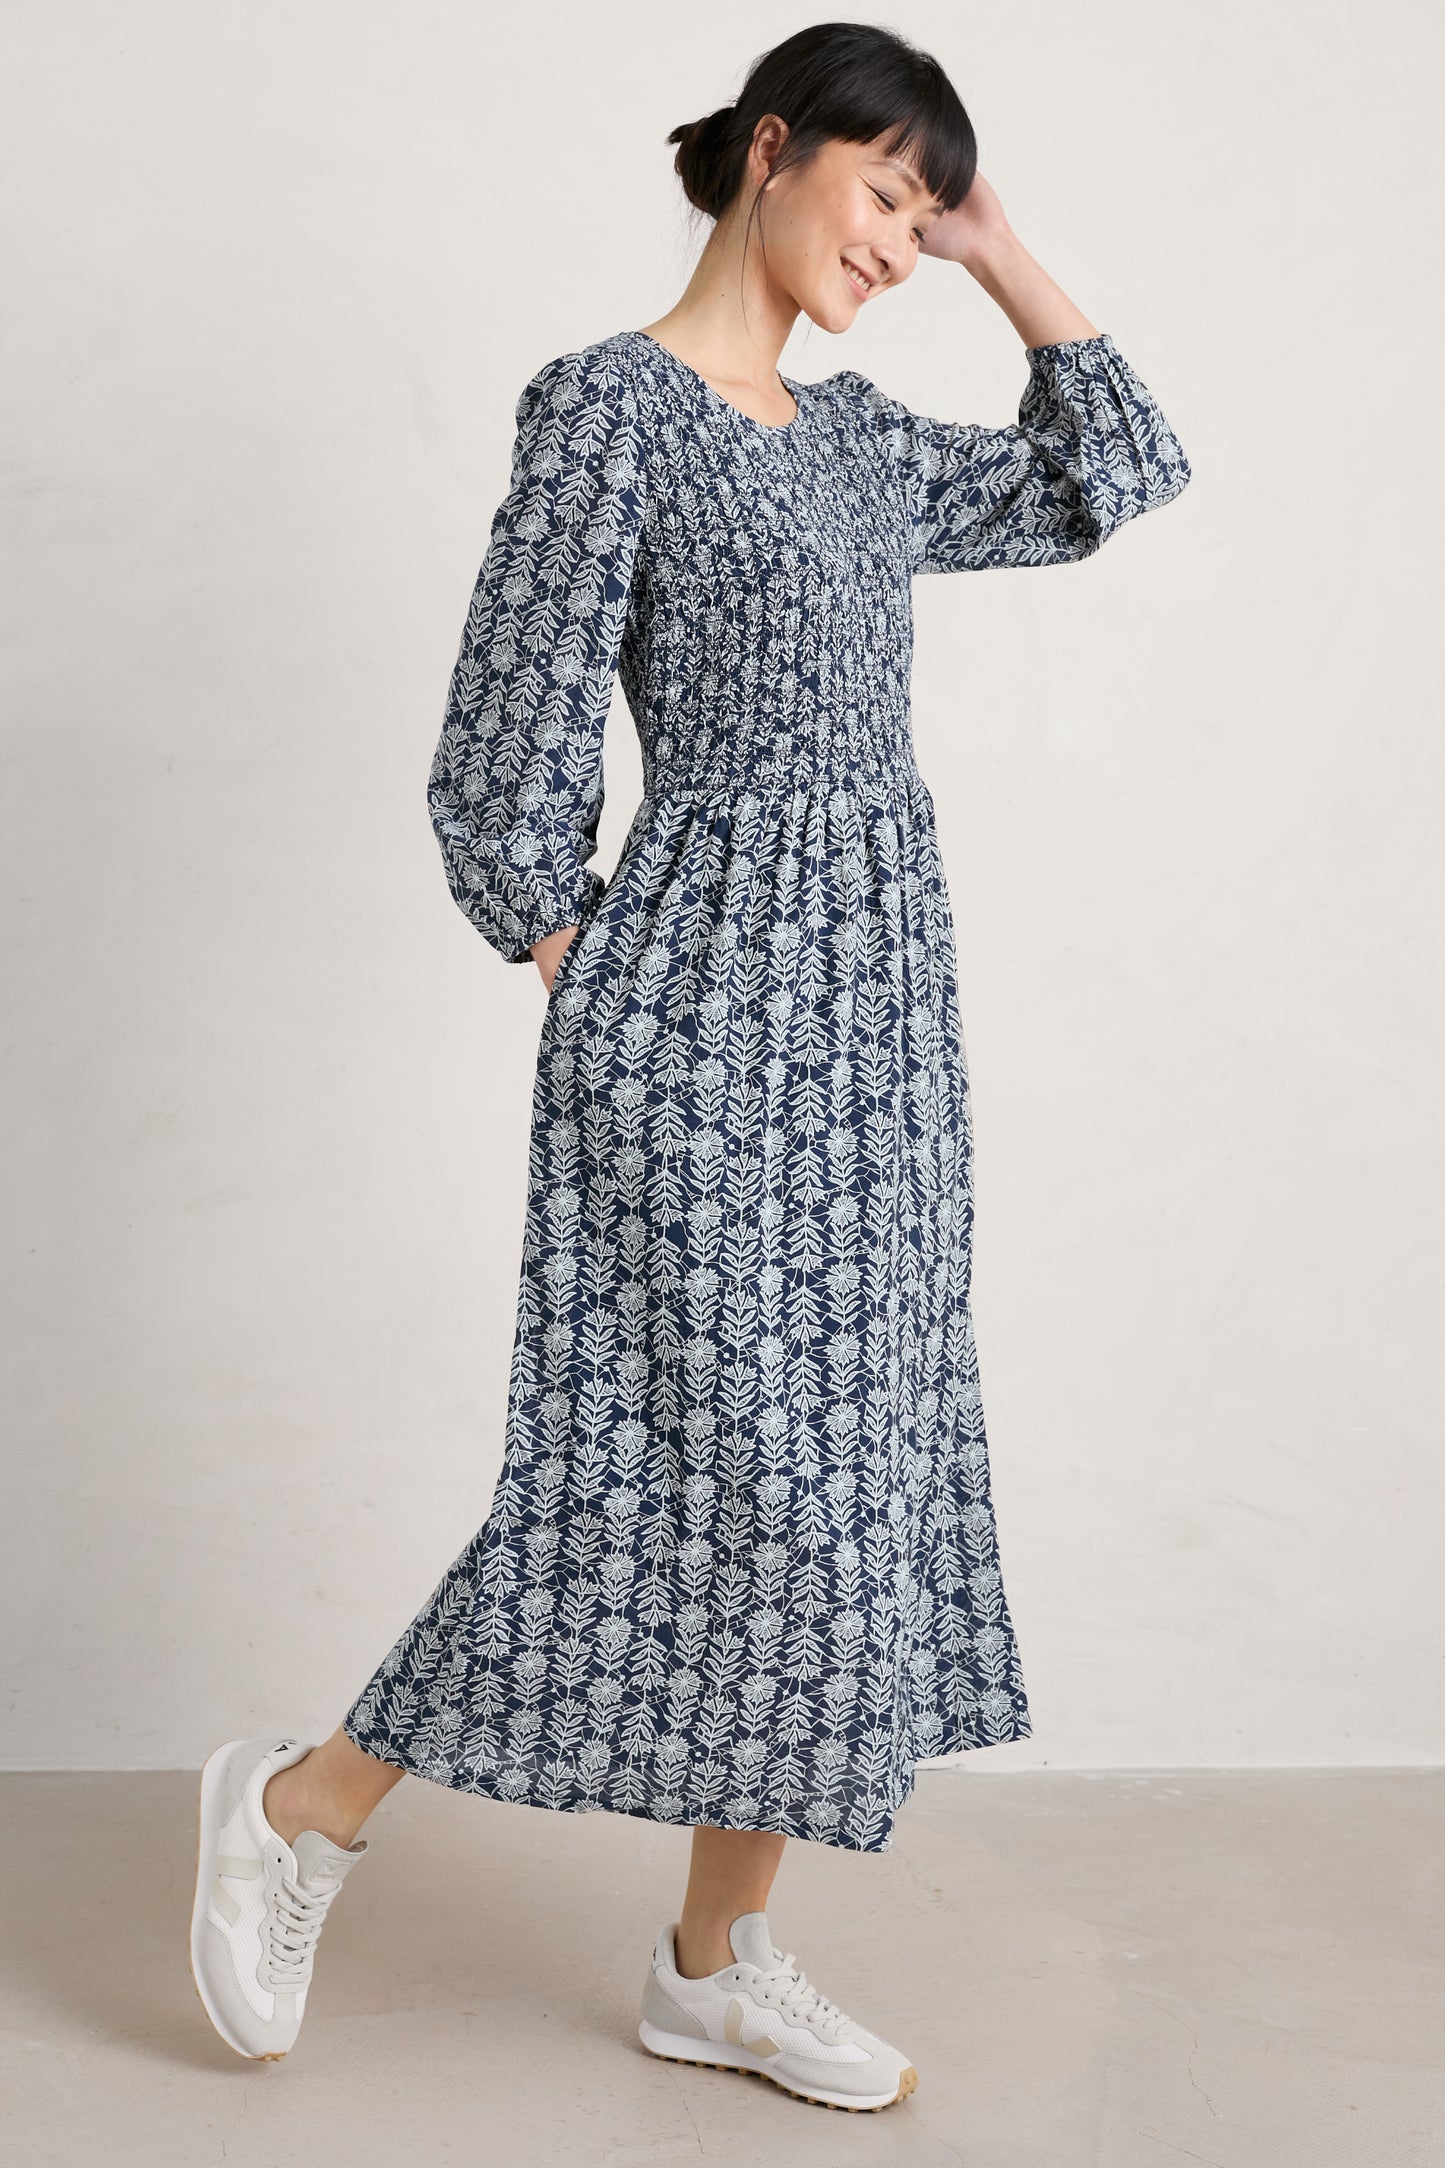 Seasalt Meadowsweet Dress - Lace Stems Maritime